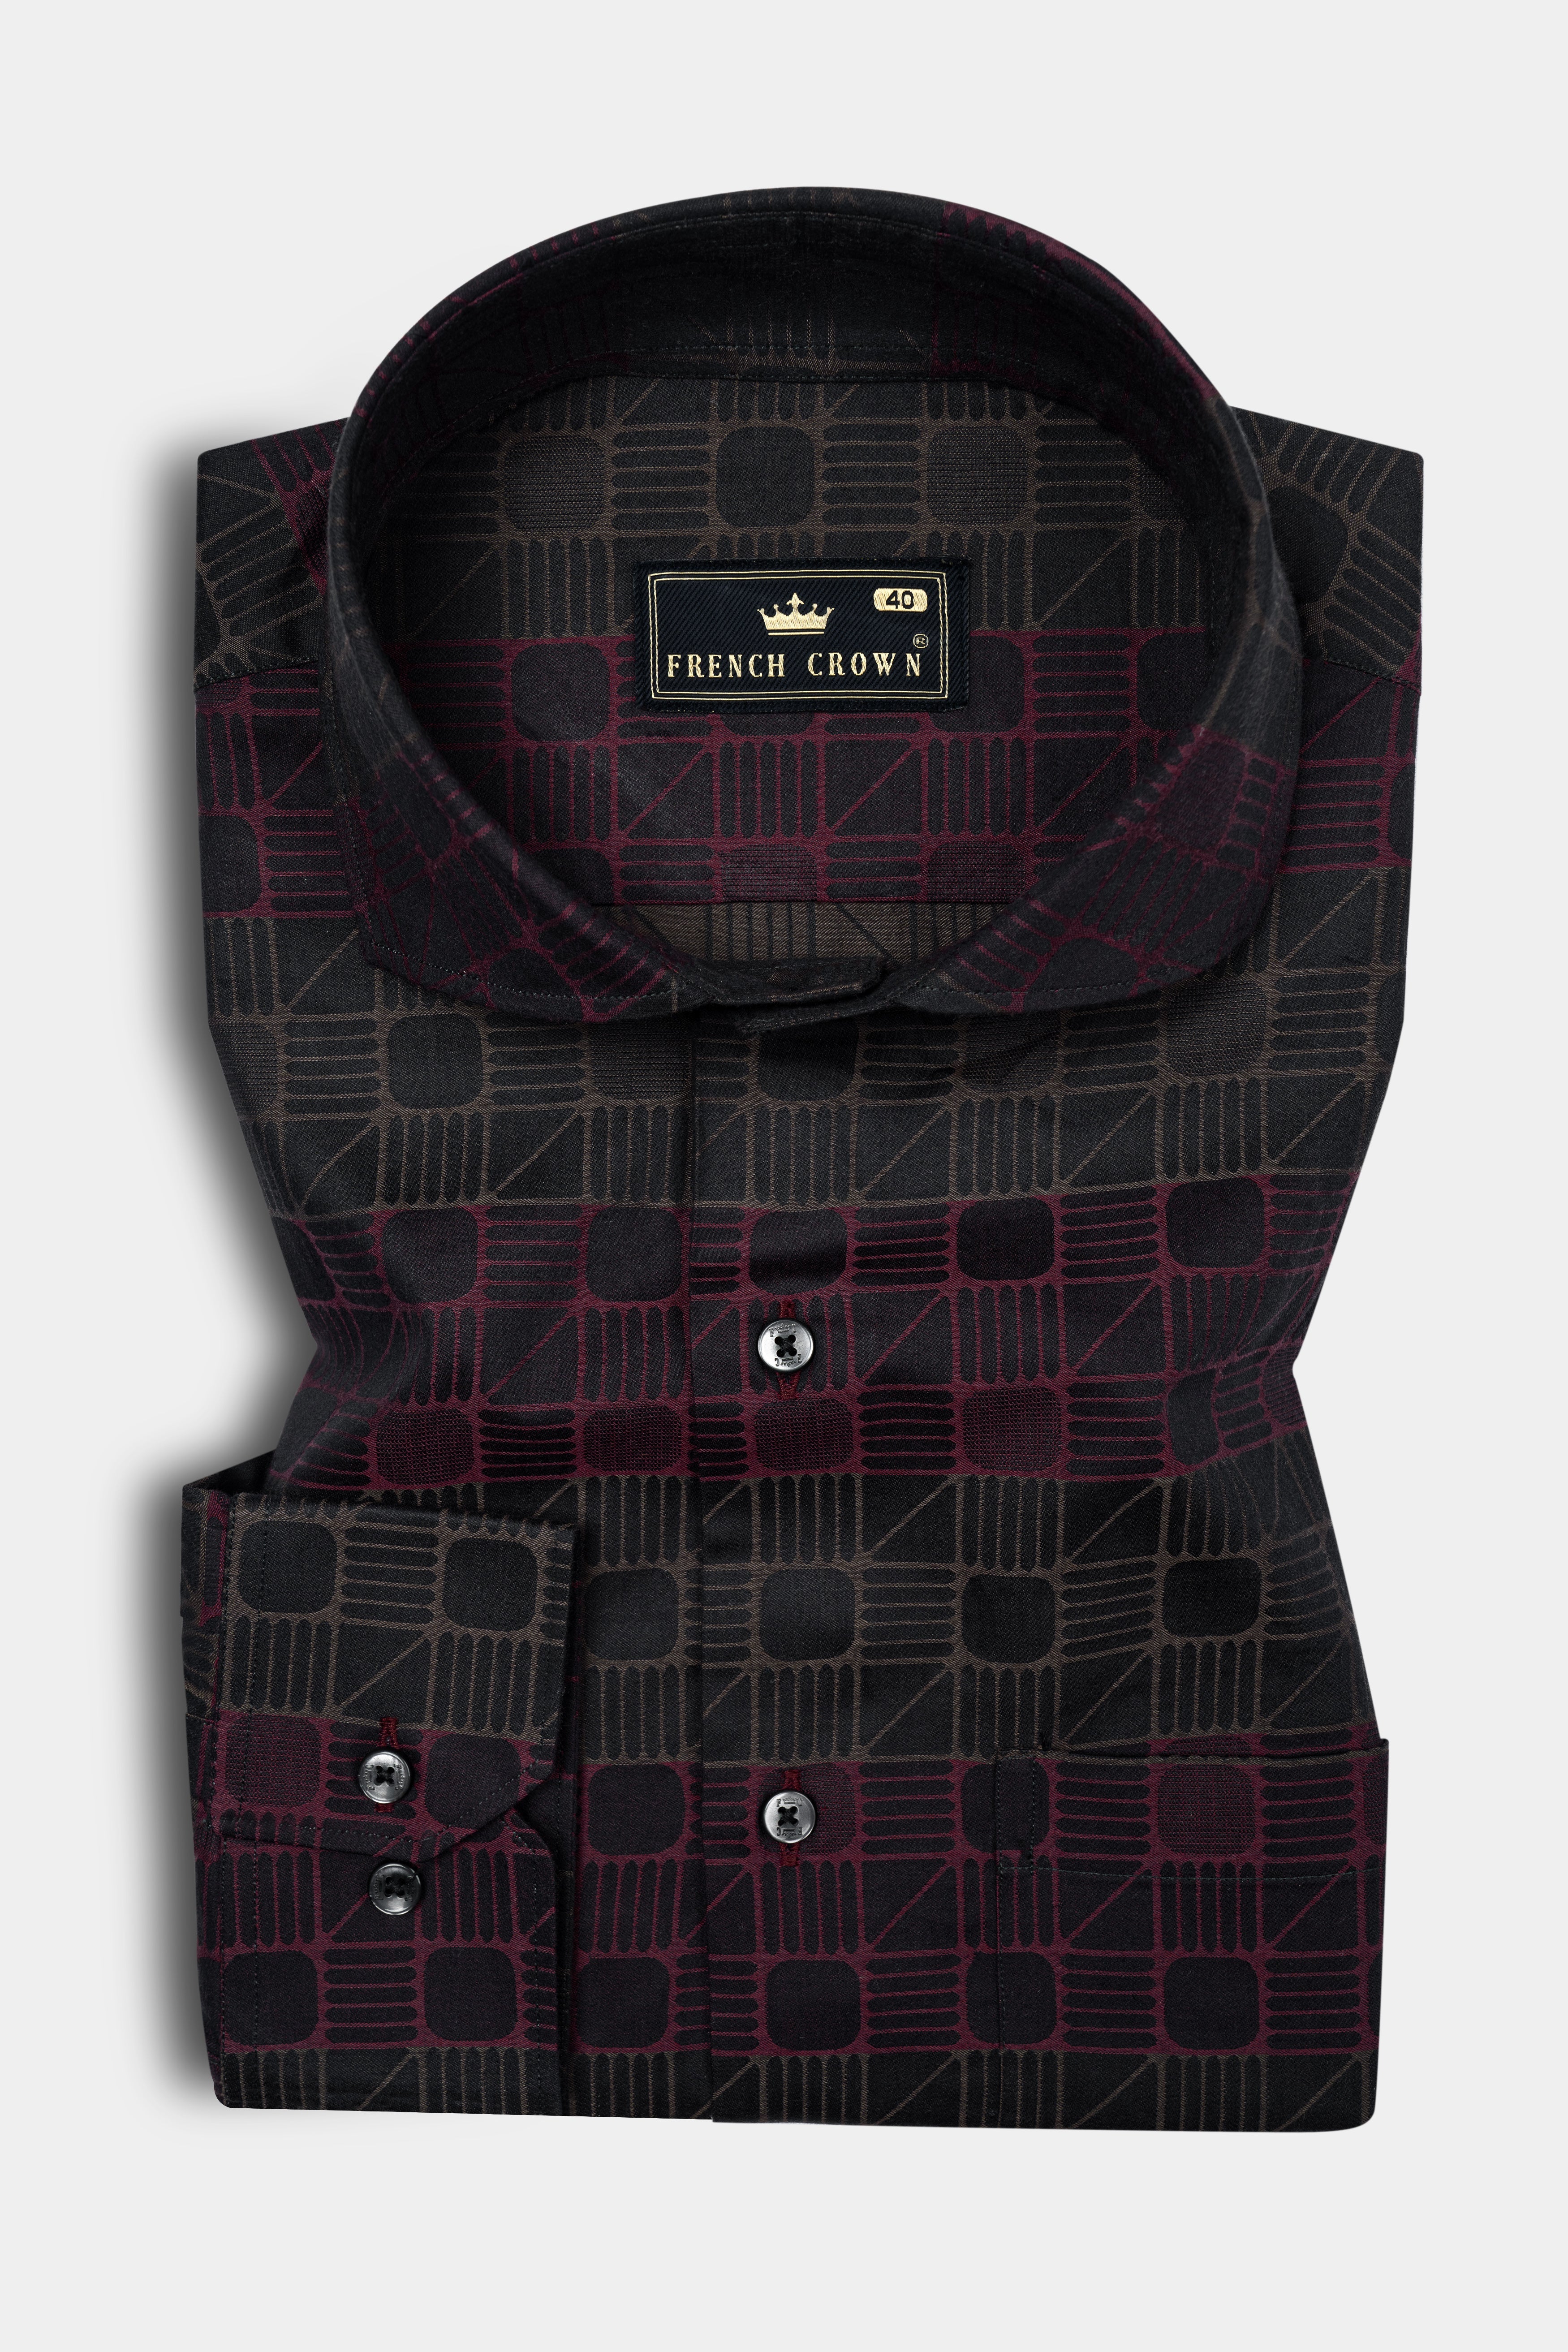 Piano Gray and Wine Berry Jacquard Textured Premium Cotton Shirt